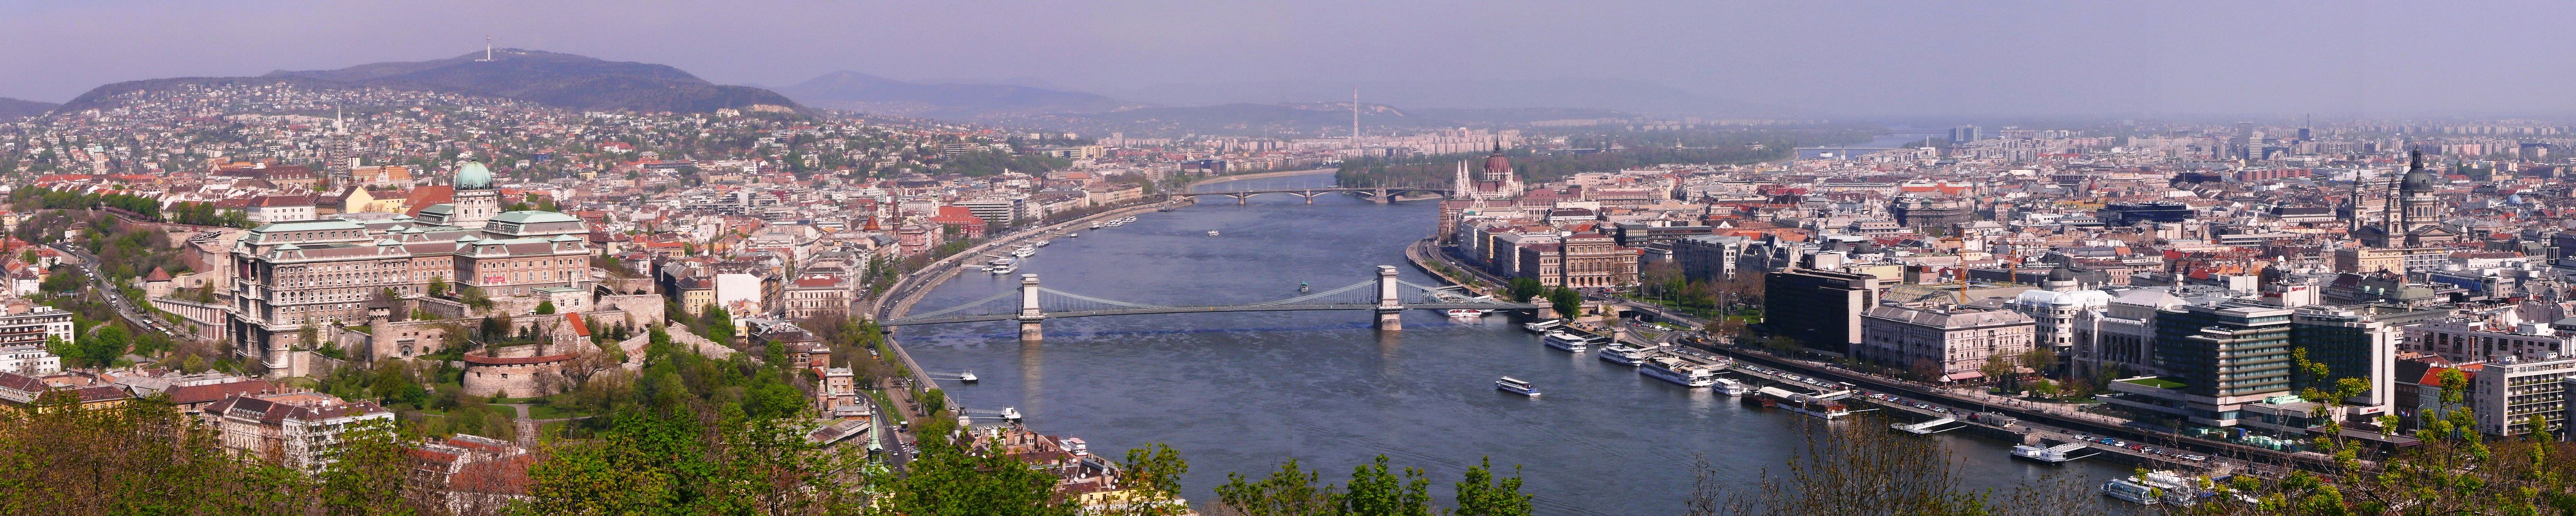 File:Budapest panorama 2.jpg - Wikimedia Commons